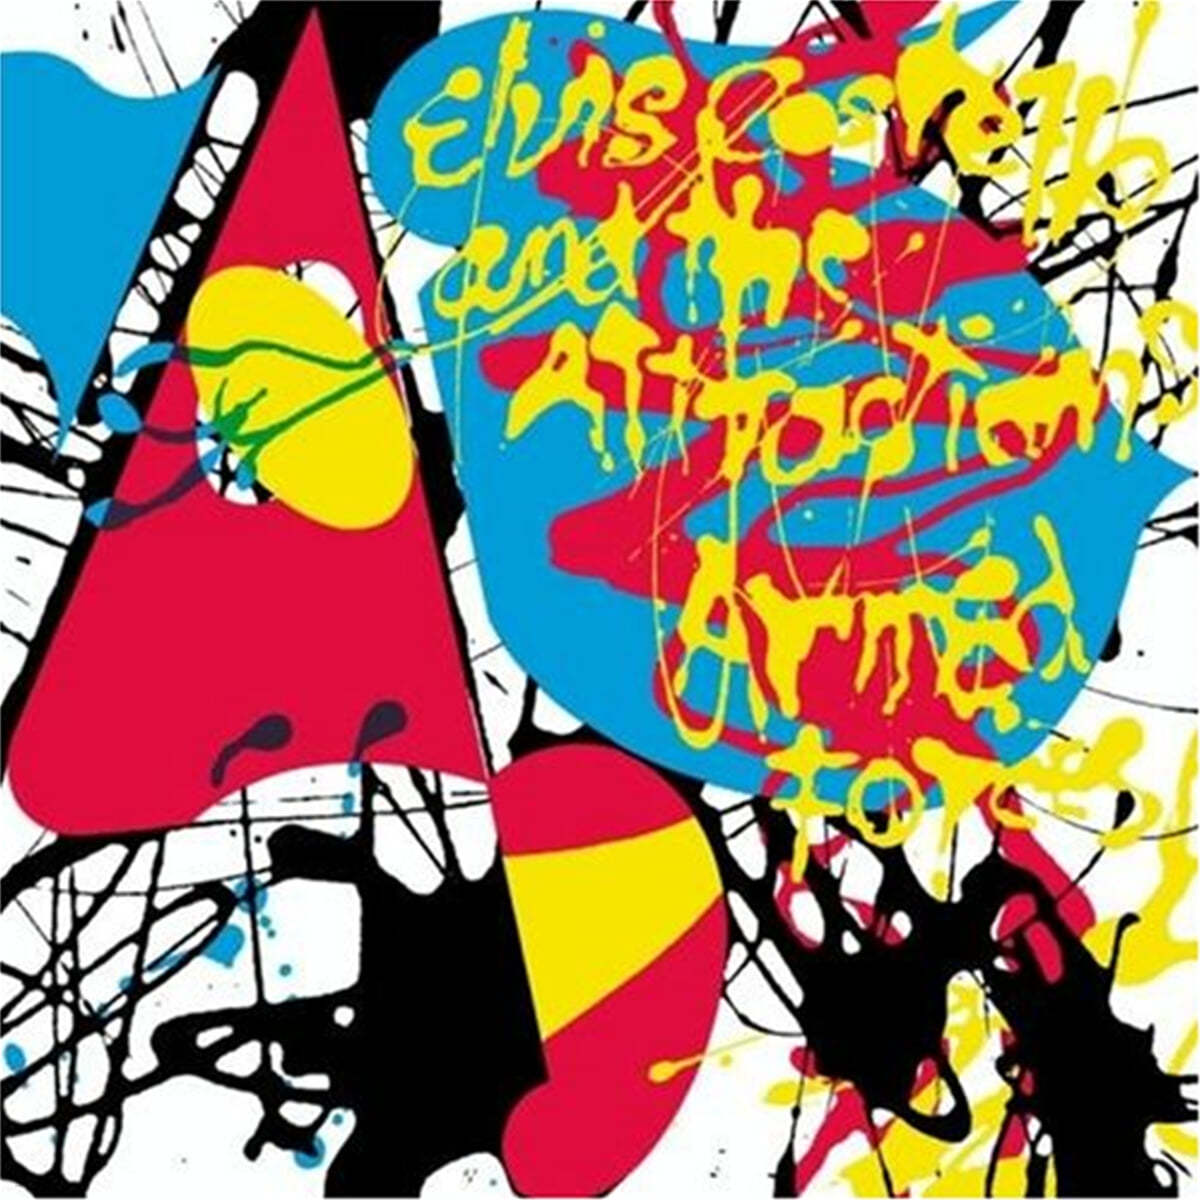 Elvis Costello &amp; The Attractions (엘비스 코스텔로 앤 디 어트랙션즈) - Armed Forces [컬러 3LP+컬러 10인치 3 Vinyl+컬러 7인치 3 Vinyl] 